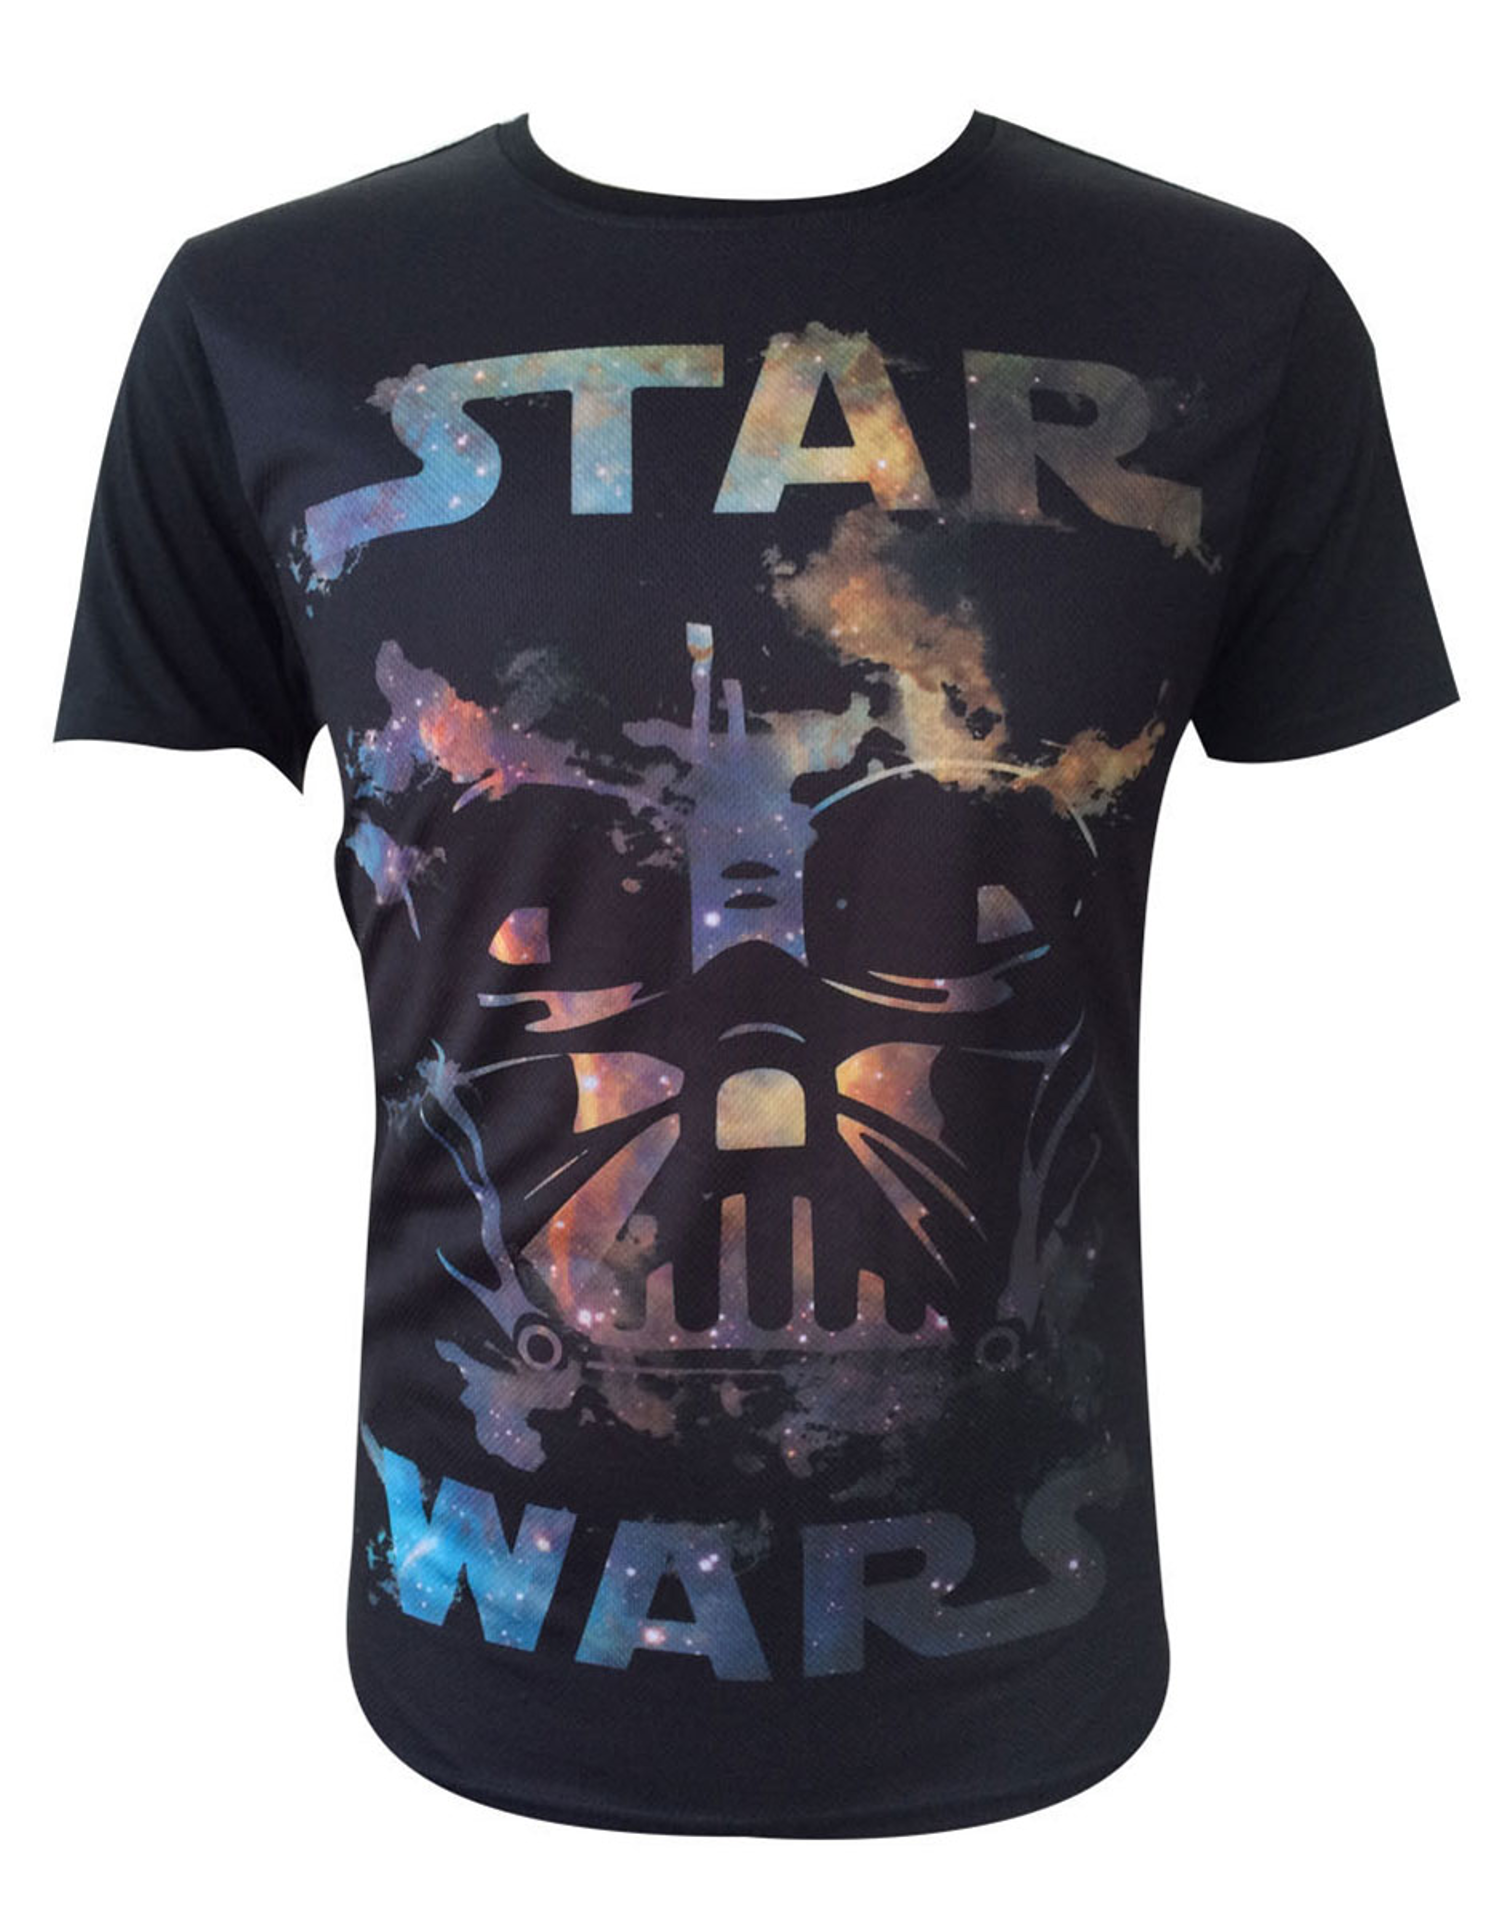 Star Wars - Darth Vader All Over T-shirt - XS